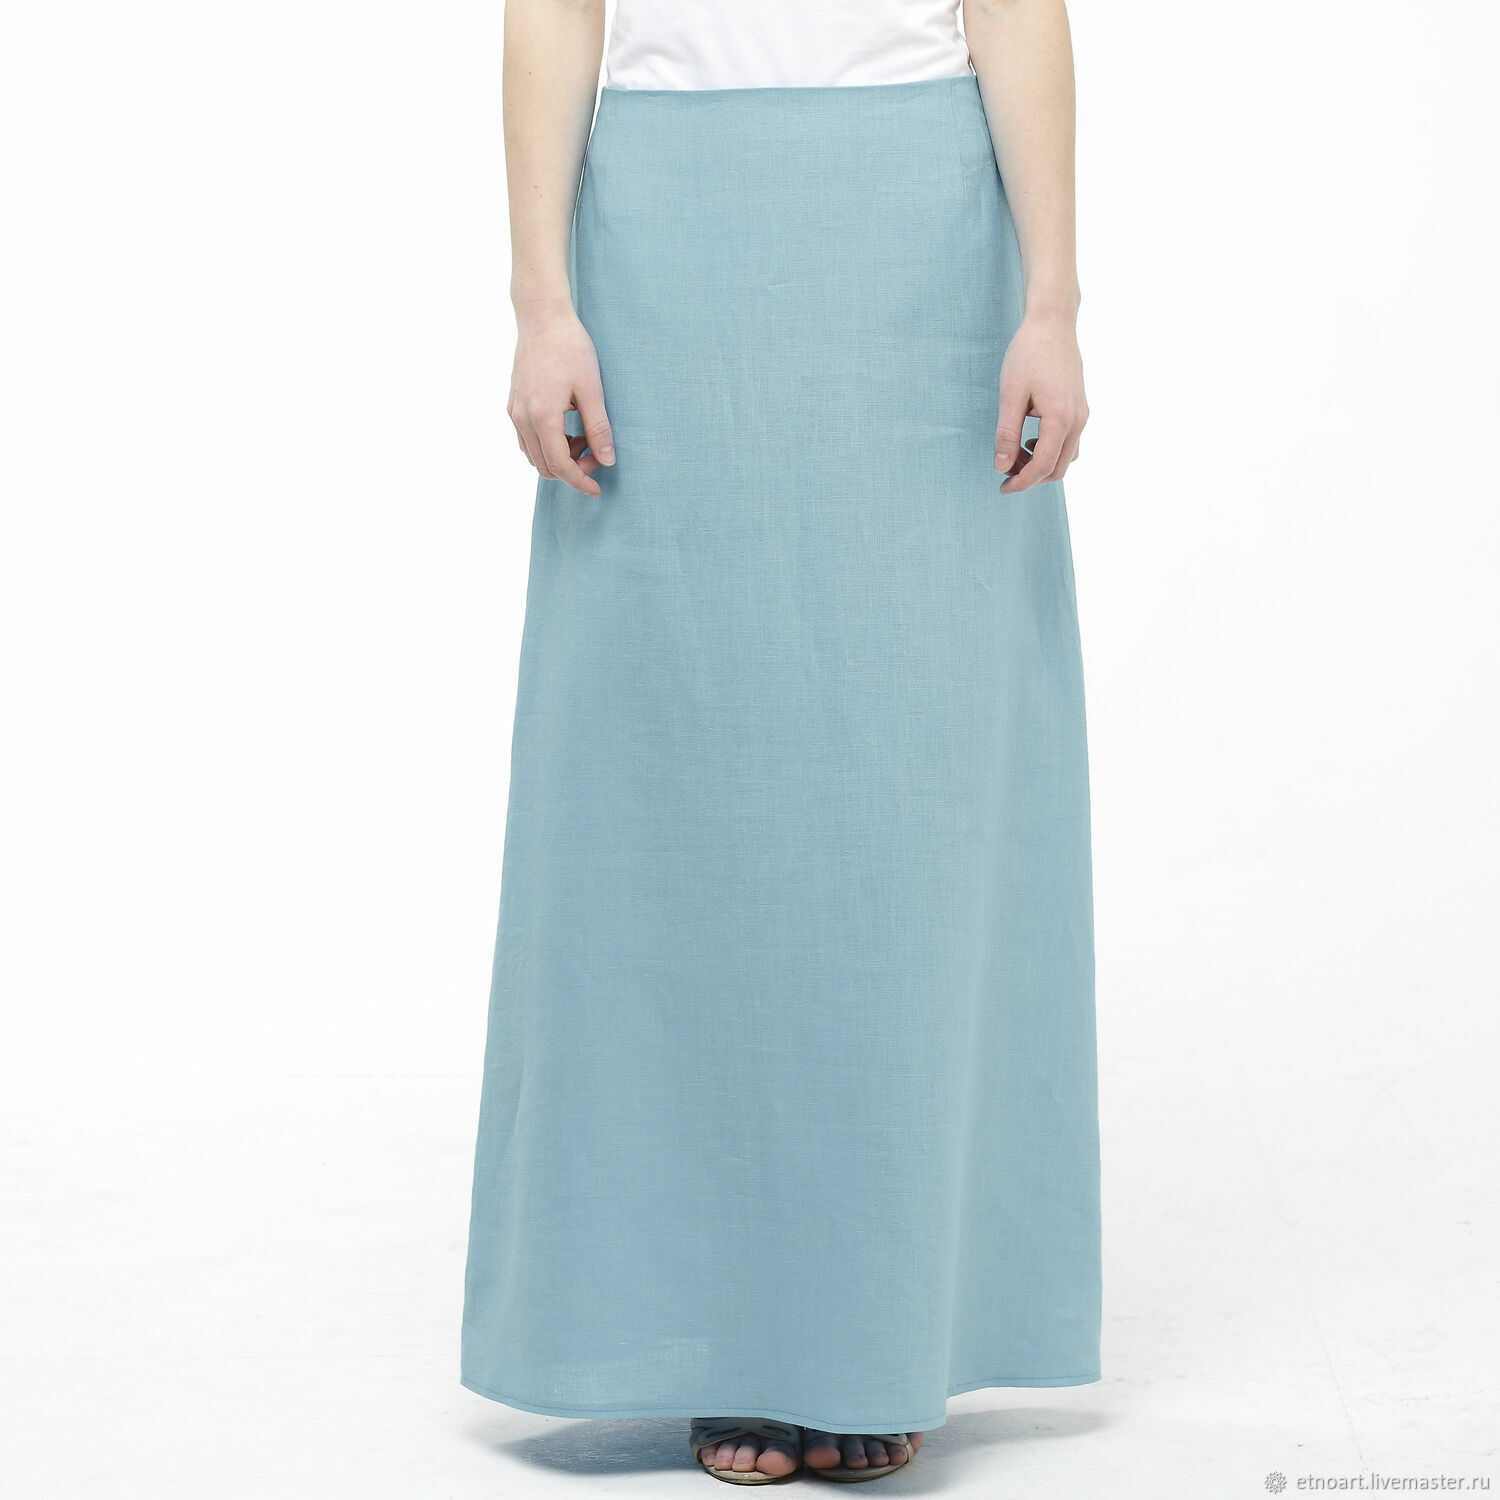 Basic A-line skirt made of 100% linen, Skirts, Tomsk,  Фото №1